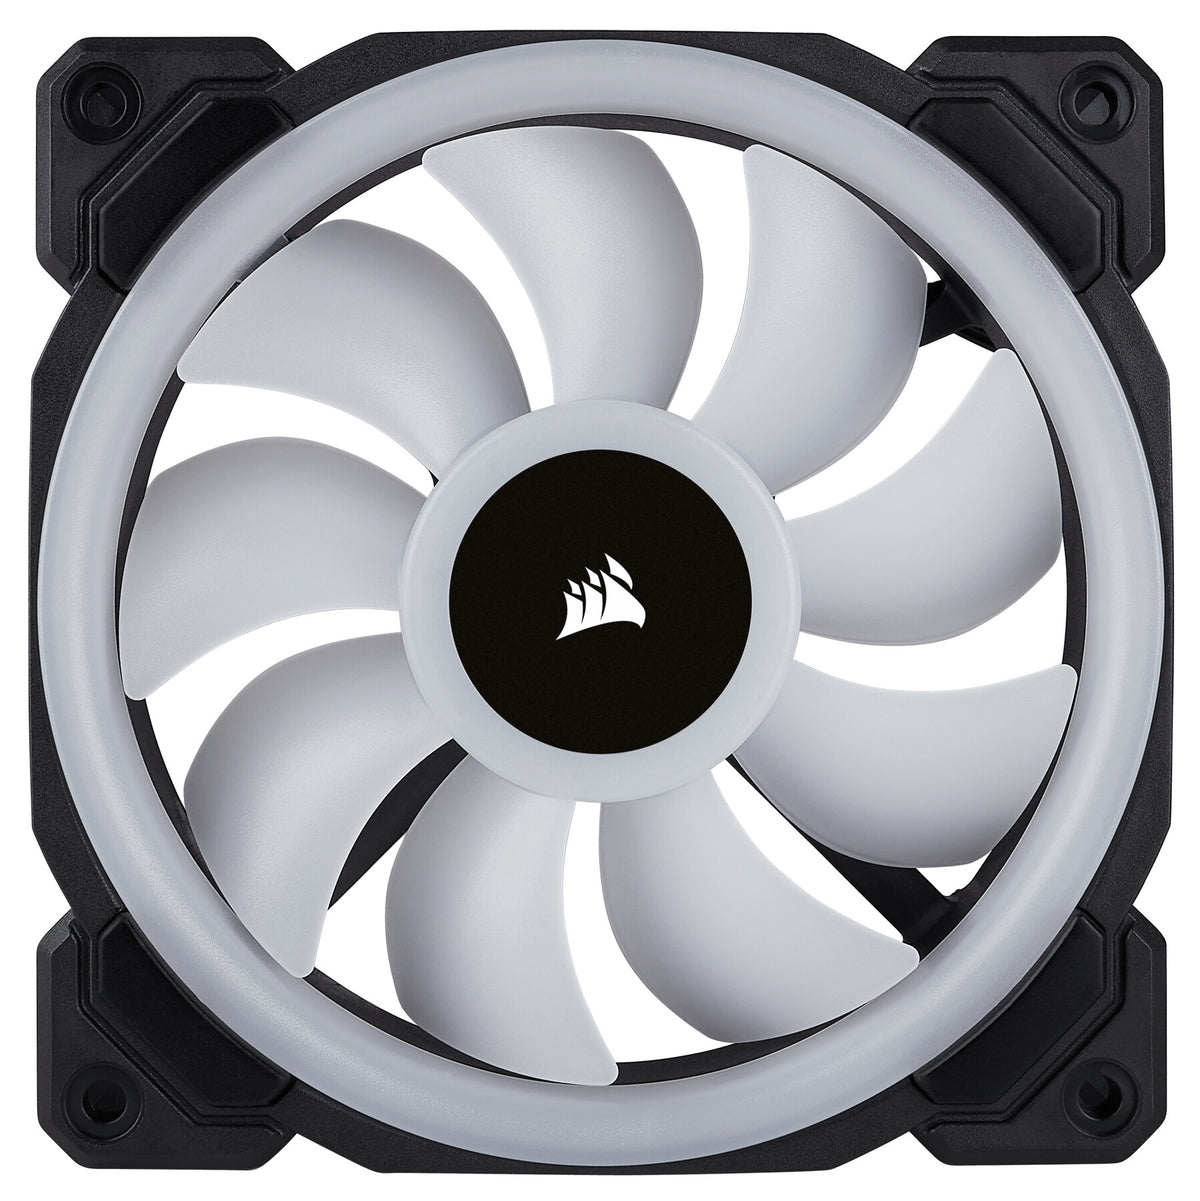 Corsair LL120 RGB - Computer Case Fan in Black / White - 120mm